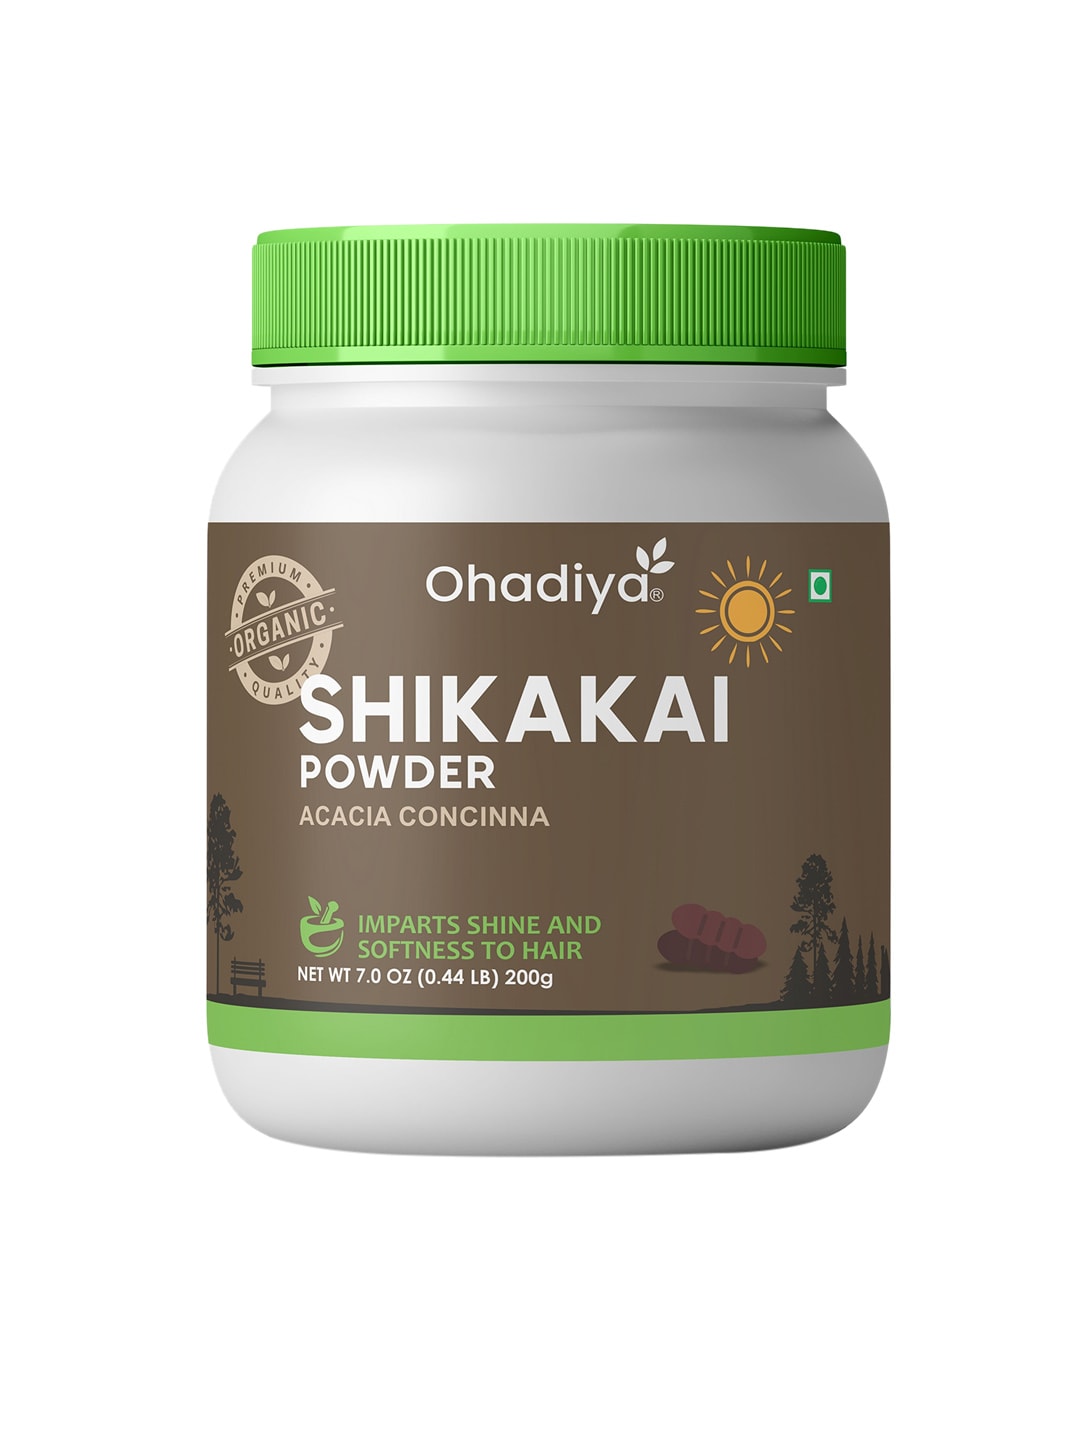 Ohadiya Premium Organic Shikakai Powder For Soft & Shiny Hair - 200 g Price in India